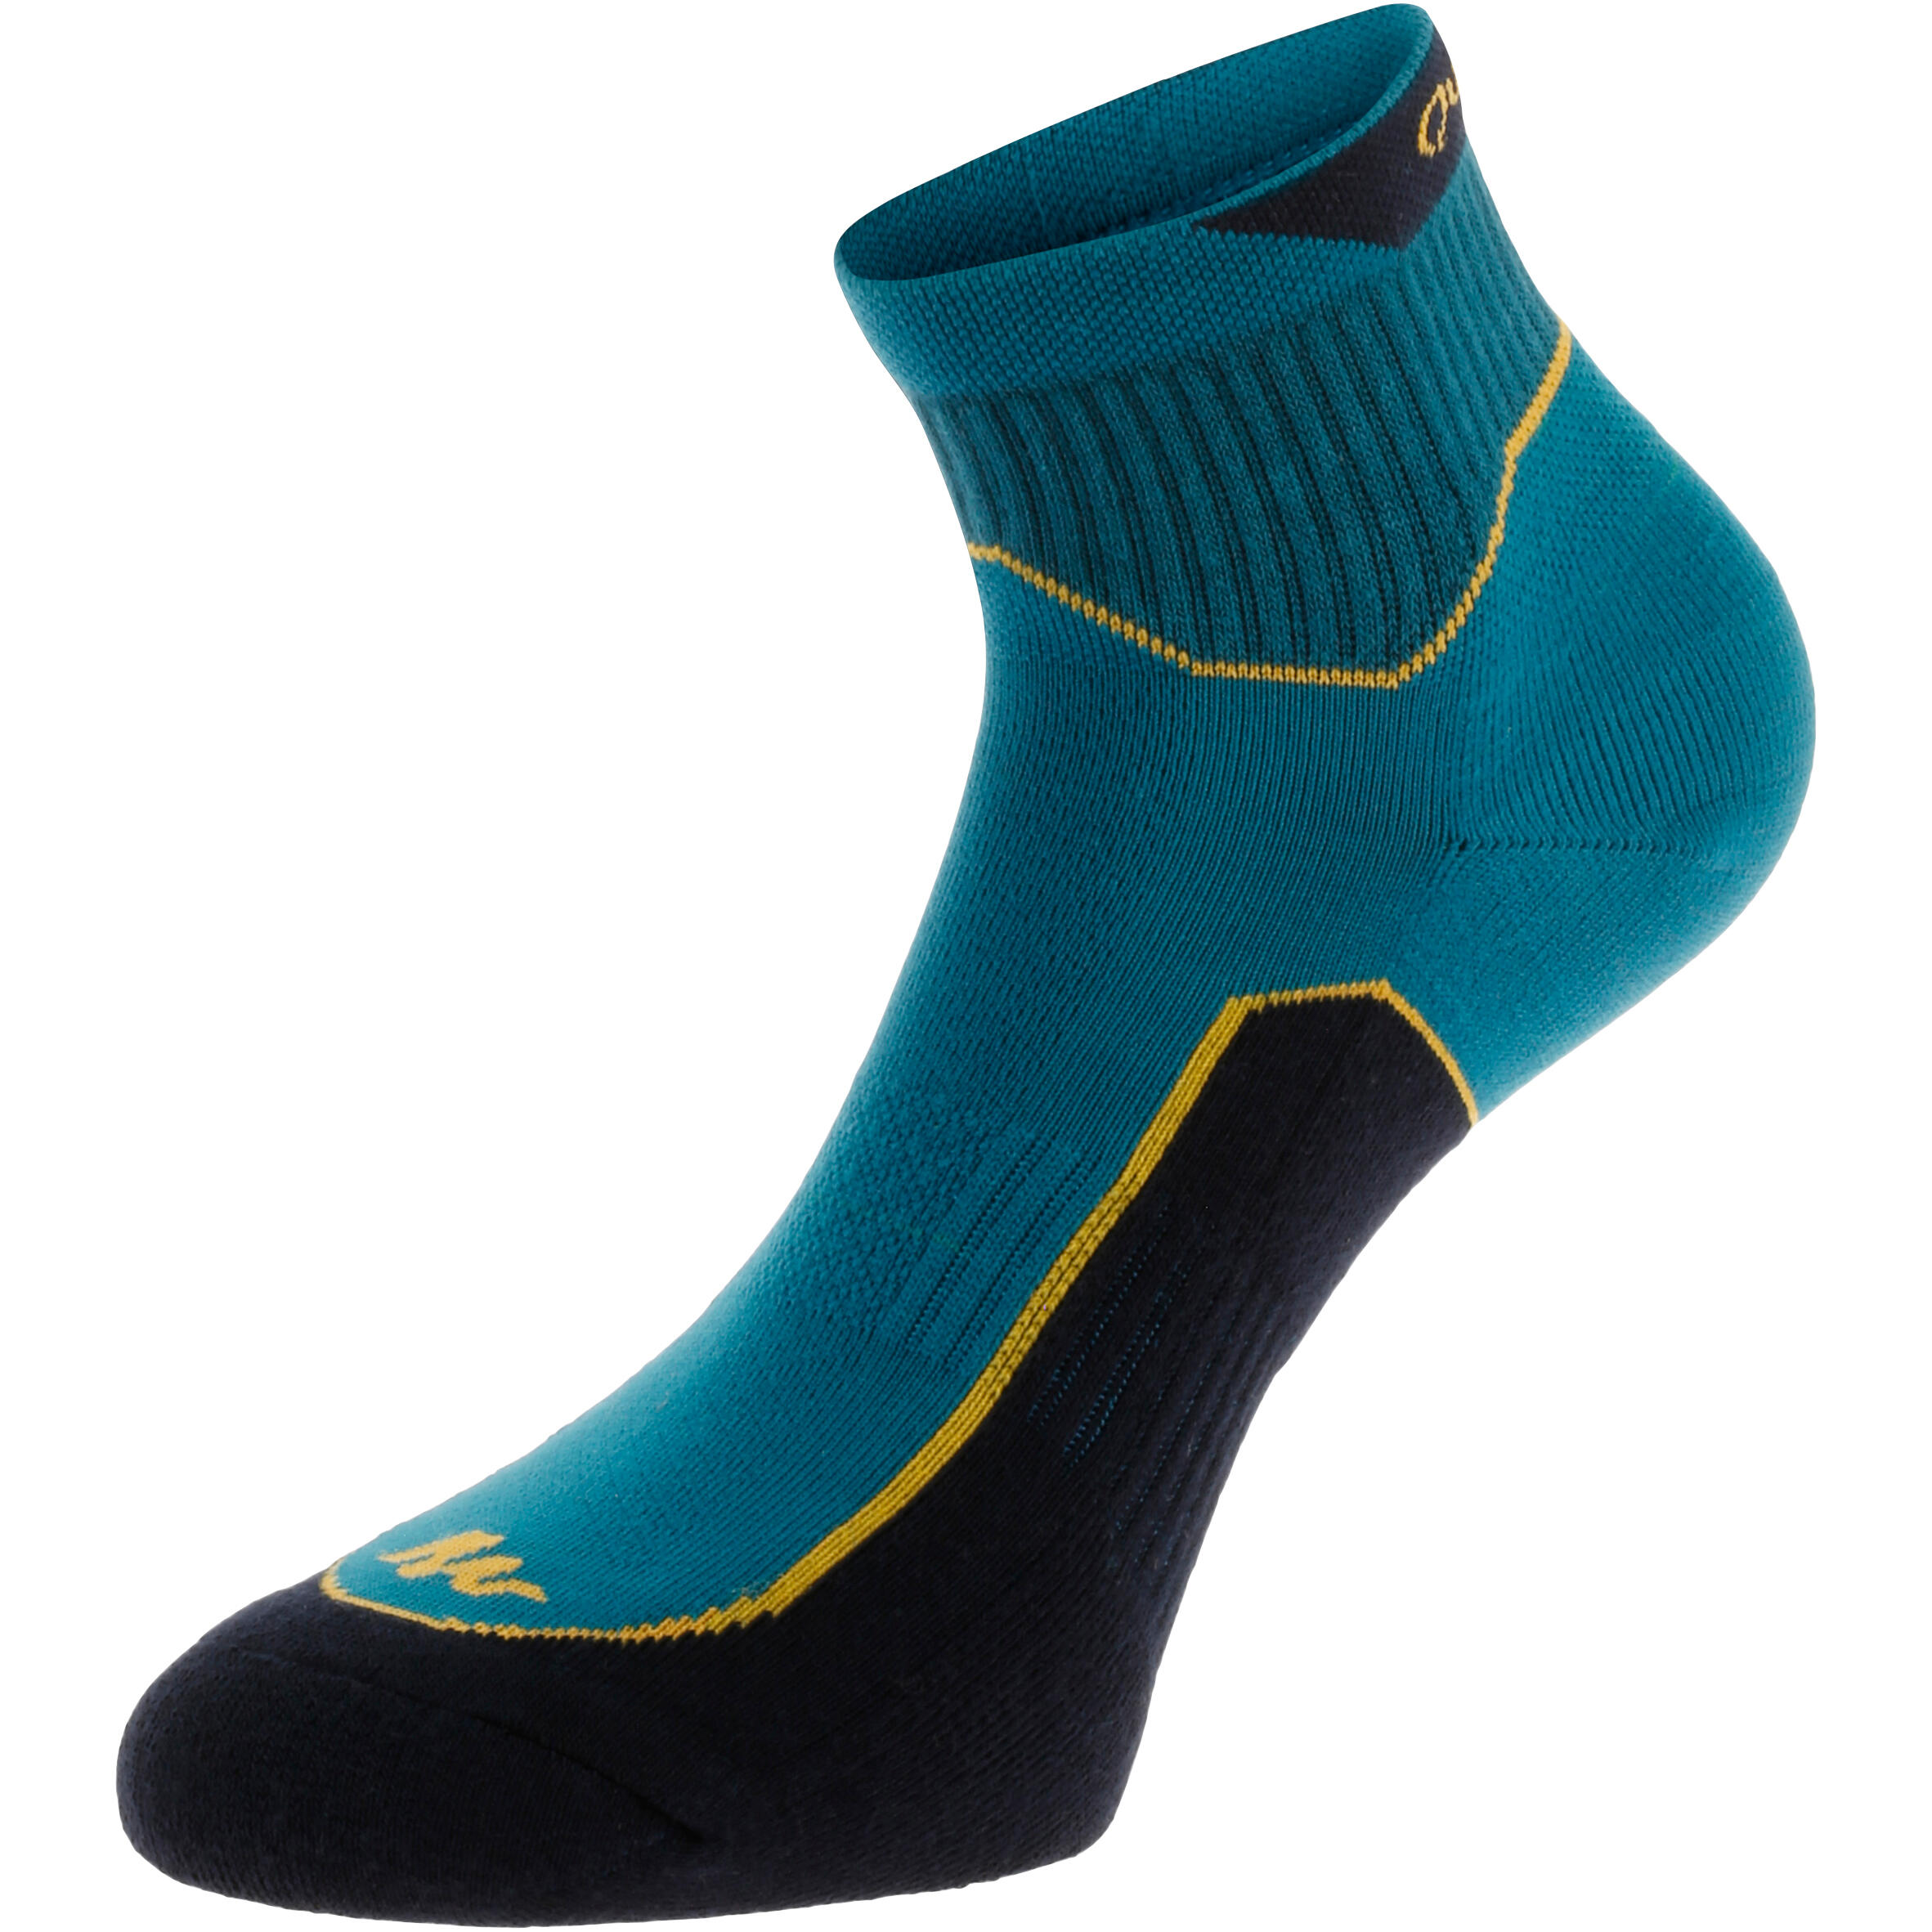 2 pairs of adult’s medium Arpenaz 100 hiking socks - Blue 3/7